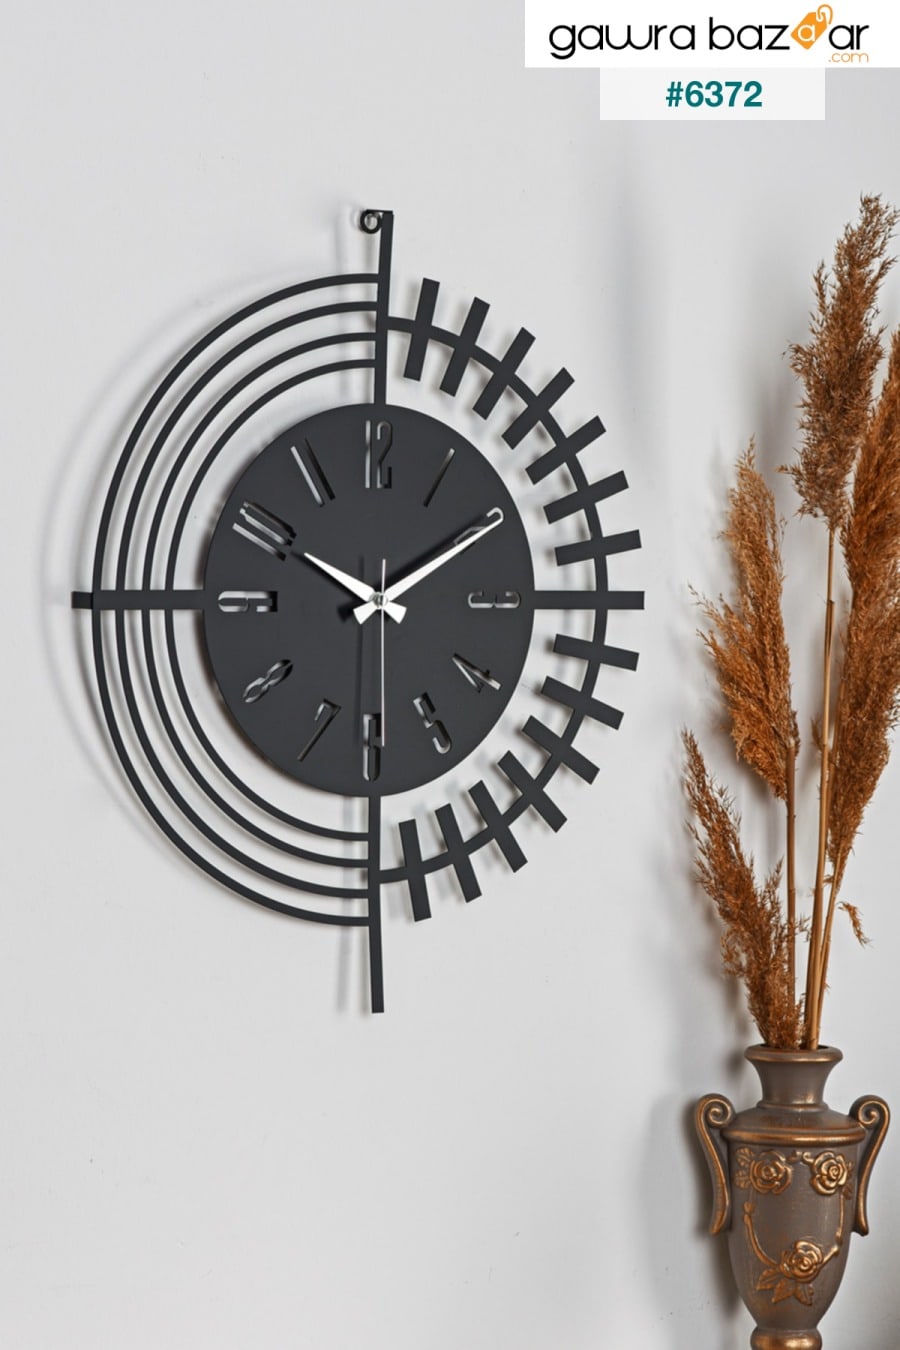 Muyika Dubai مجموعة جديدة من ساعة حائط مزخرفة بمعدن أسود 41x41 سم آلية صامتة Mds-41 Muyika Design 0